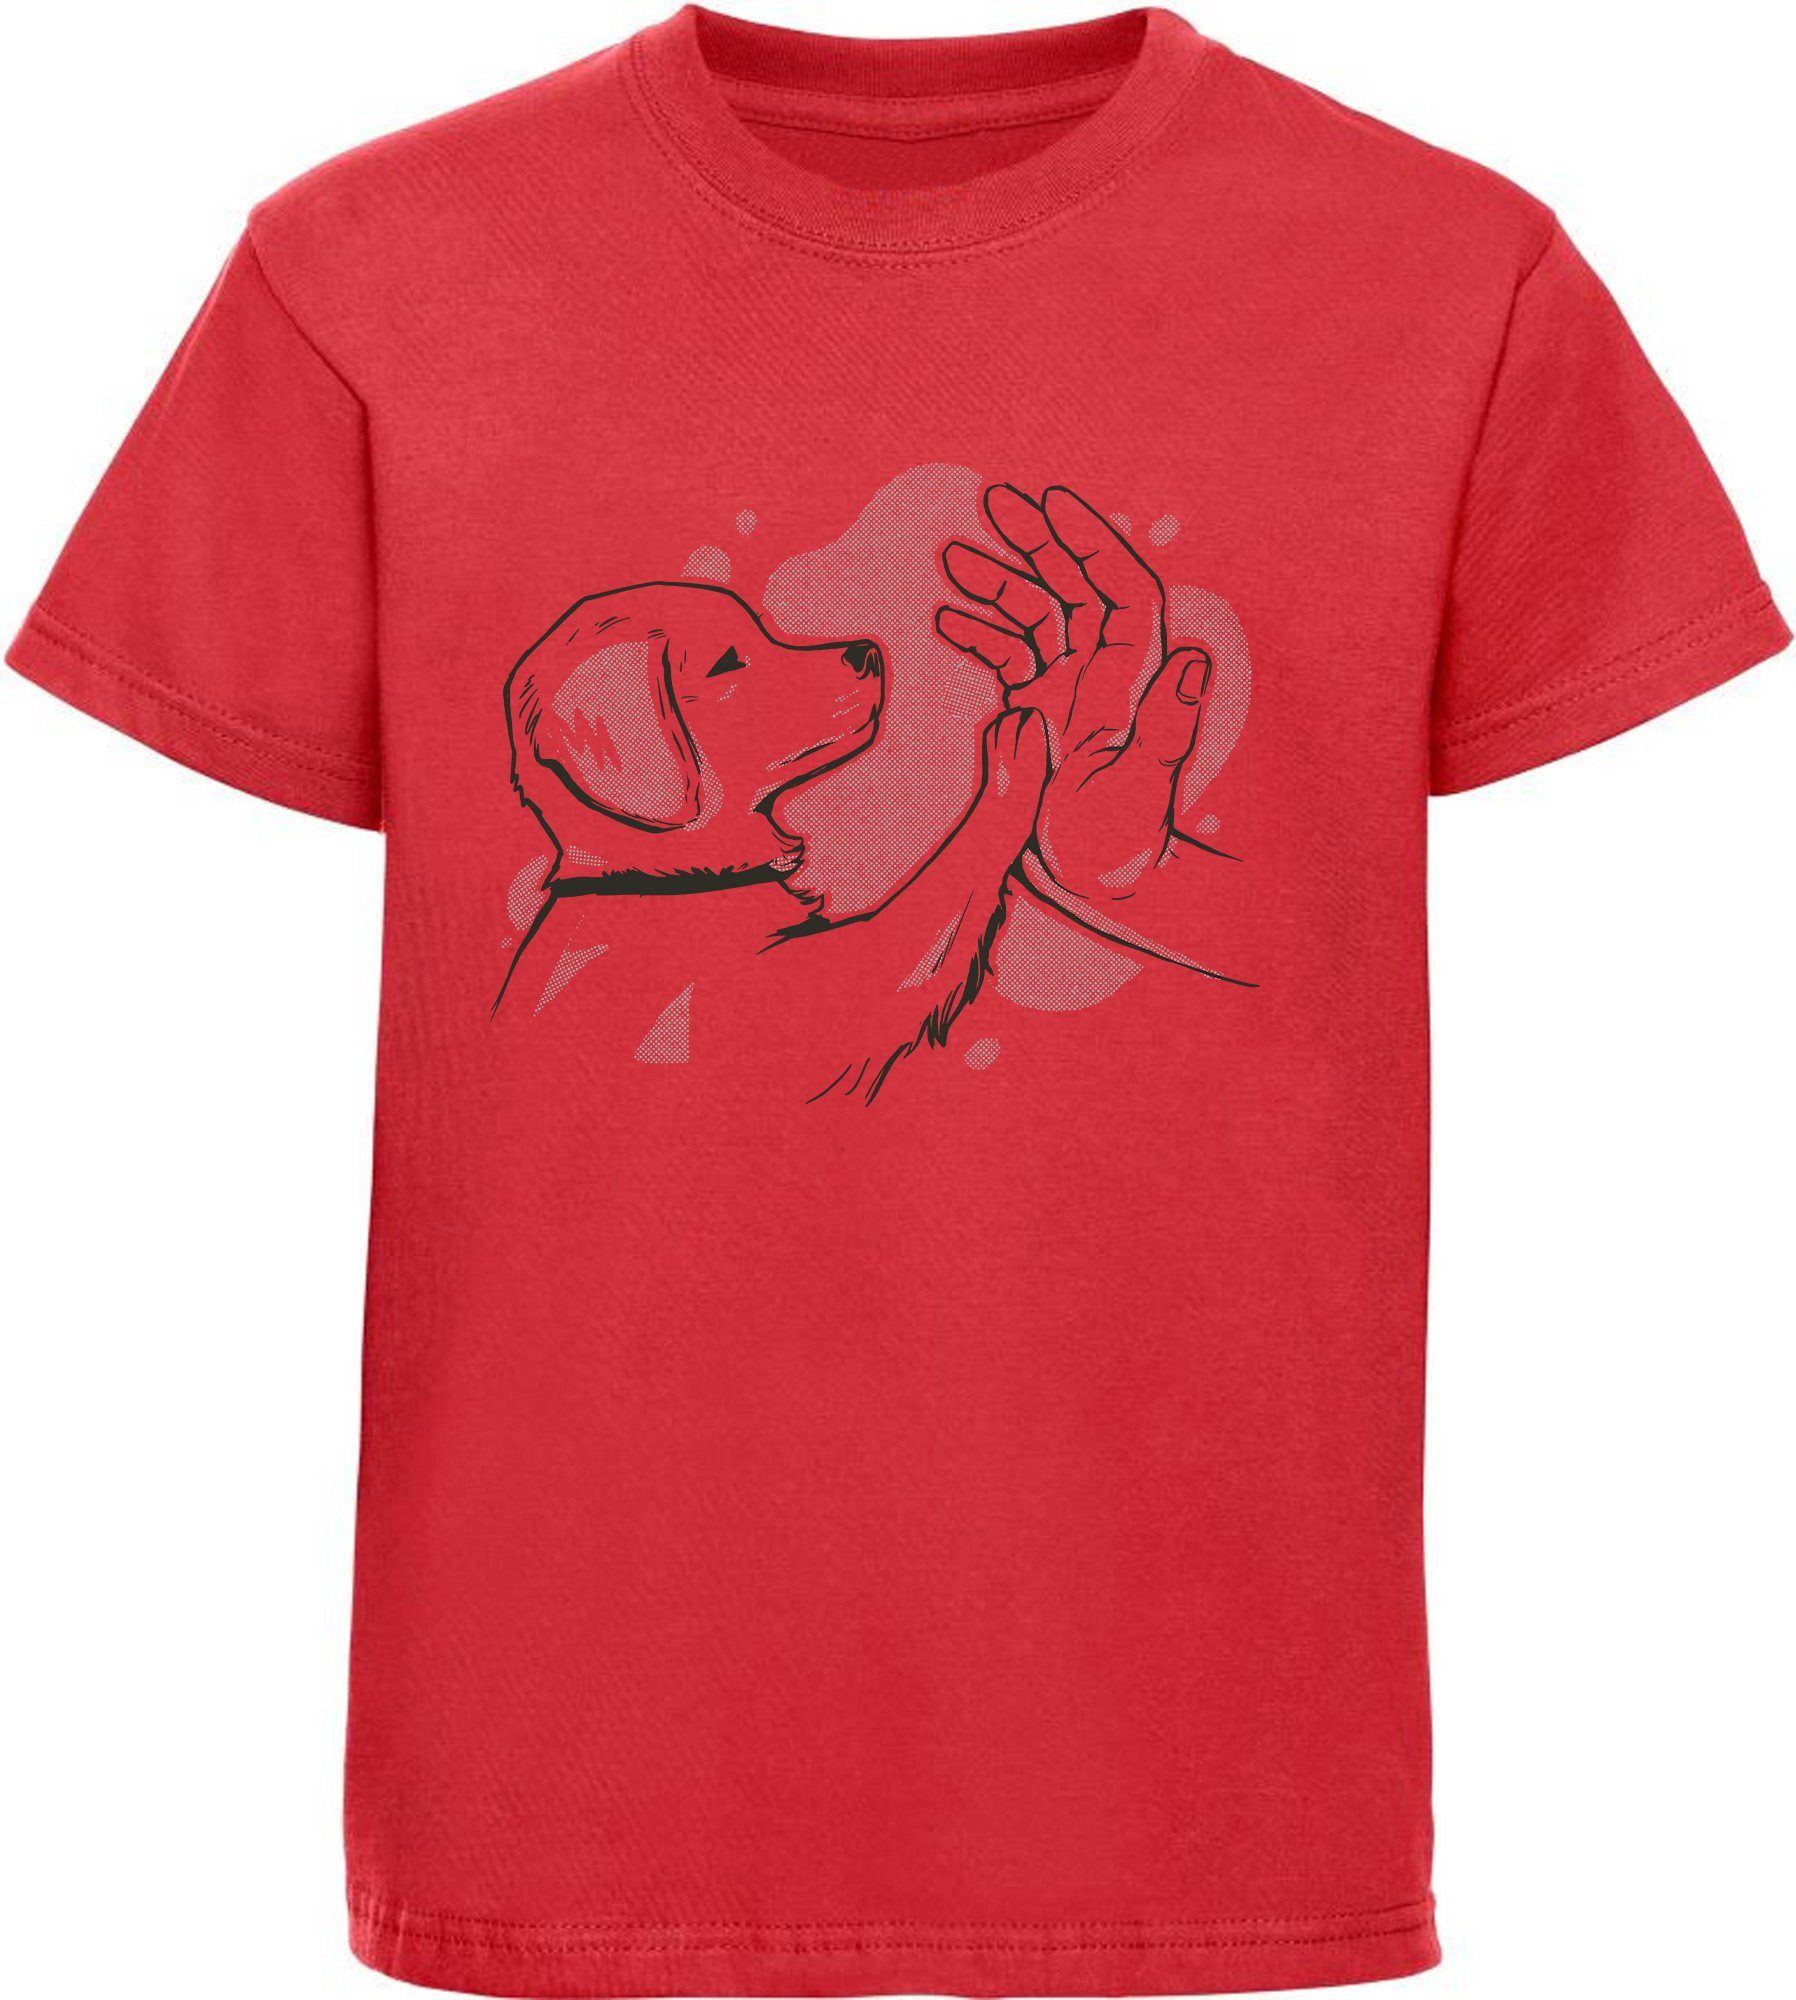 MyDesign24 Print-Shirt Kinder Hunde T-Shirt gibt - Aufdruck, Baumwollshirt Welpe bedruckt rot i241 Pfötchen der mit Labrador